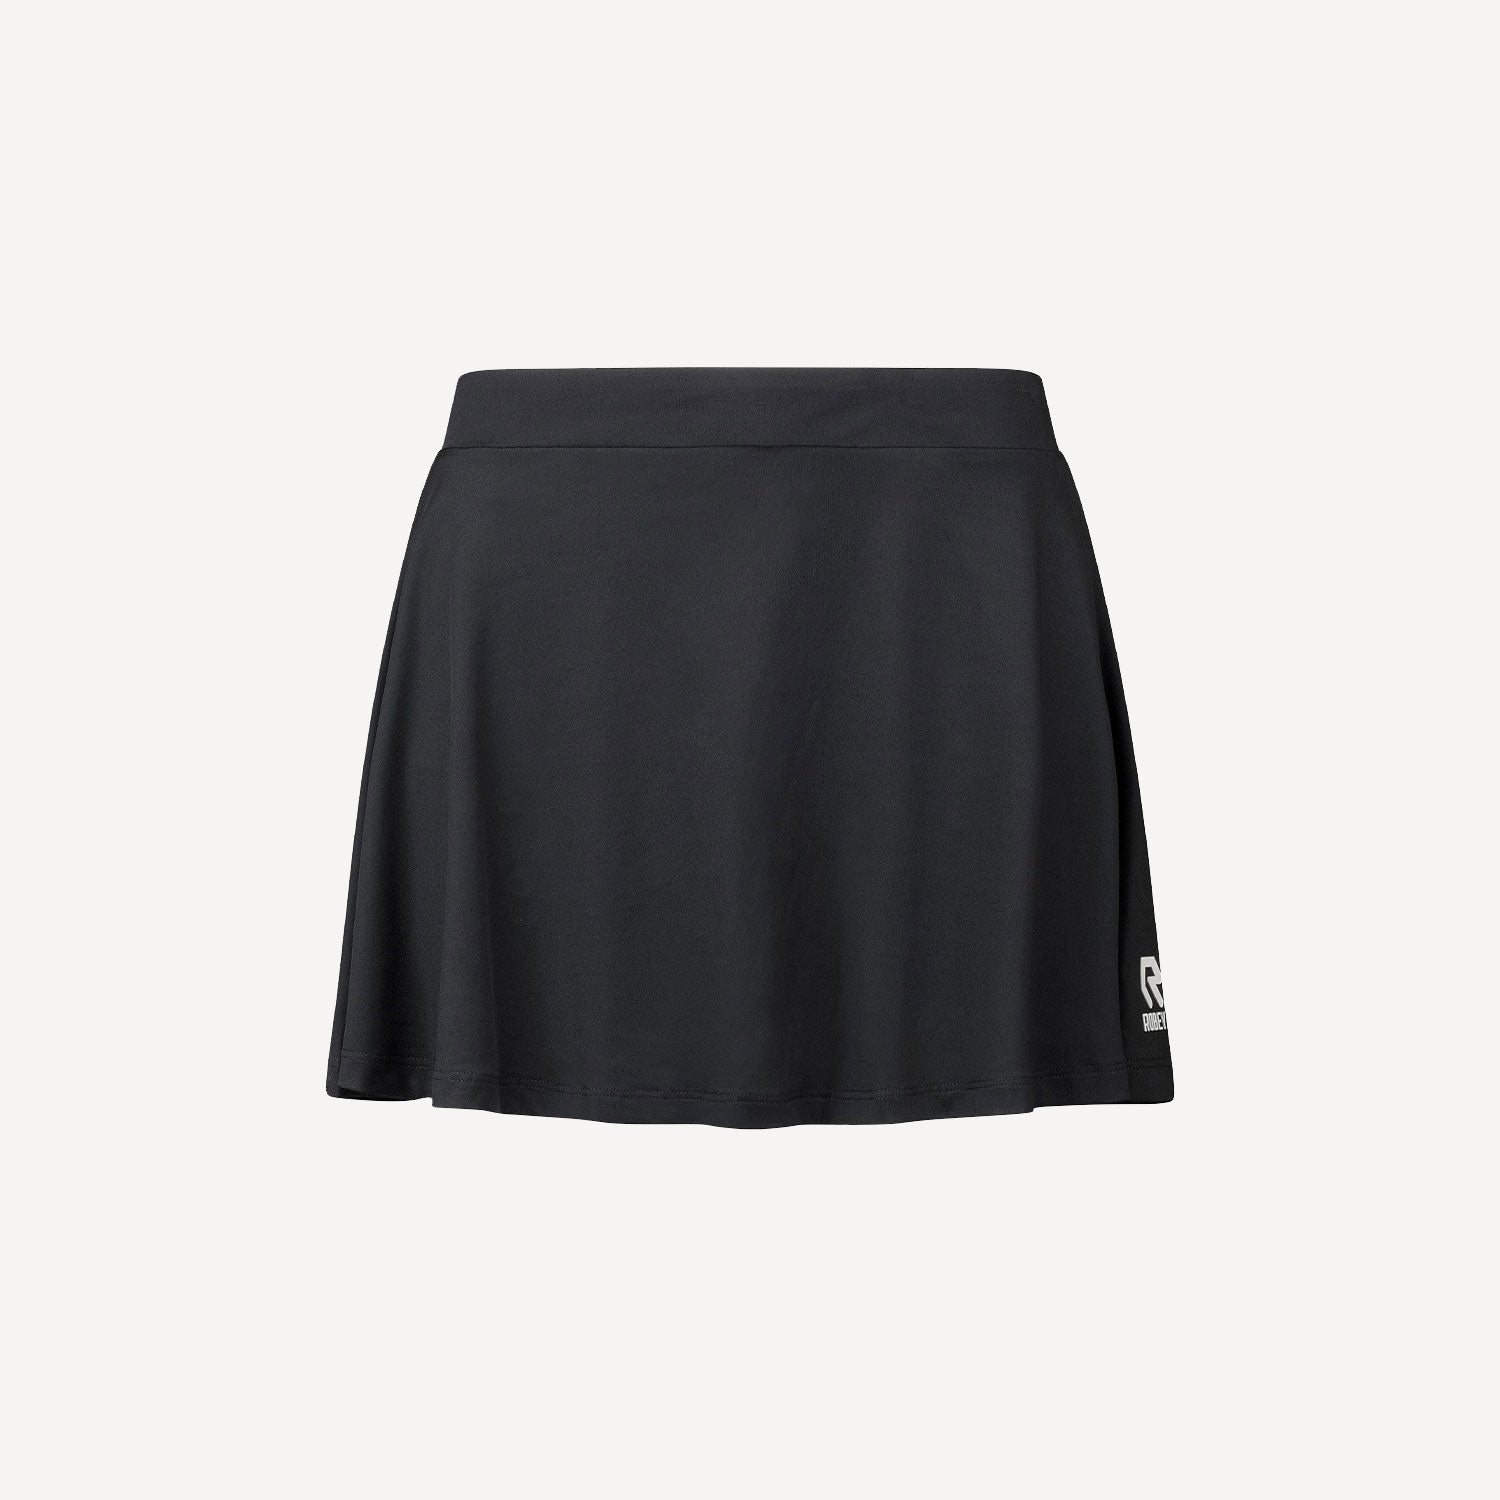 Robey Ralley Women's Tennis Skirt - Black (1)